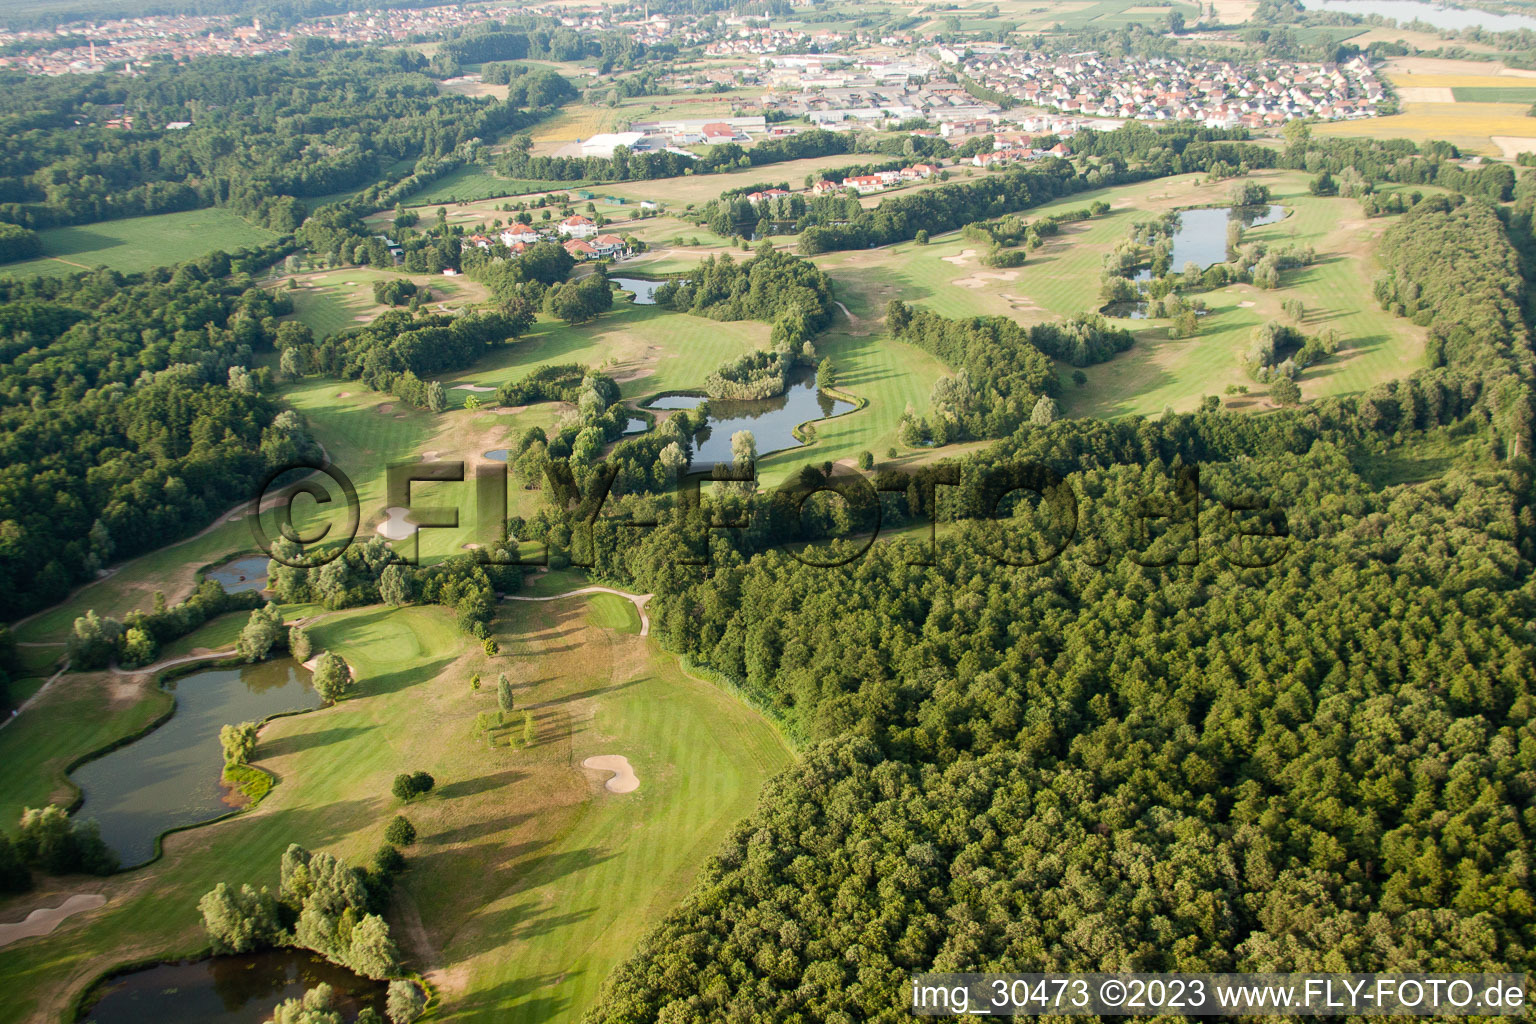 Aerial photograpy of Golf club Soufflenheim Baden-Baden in Soufflenheim in the state Bas-Rhin, France